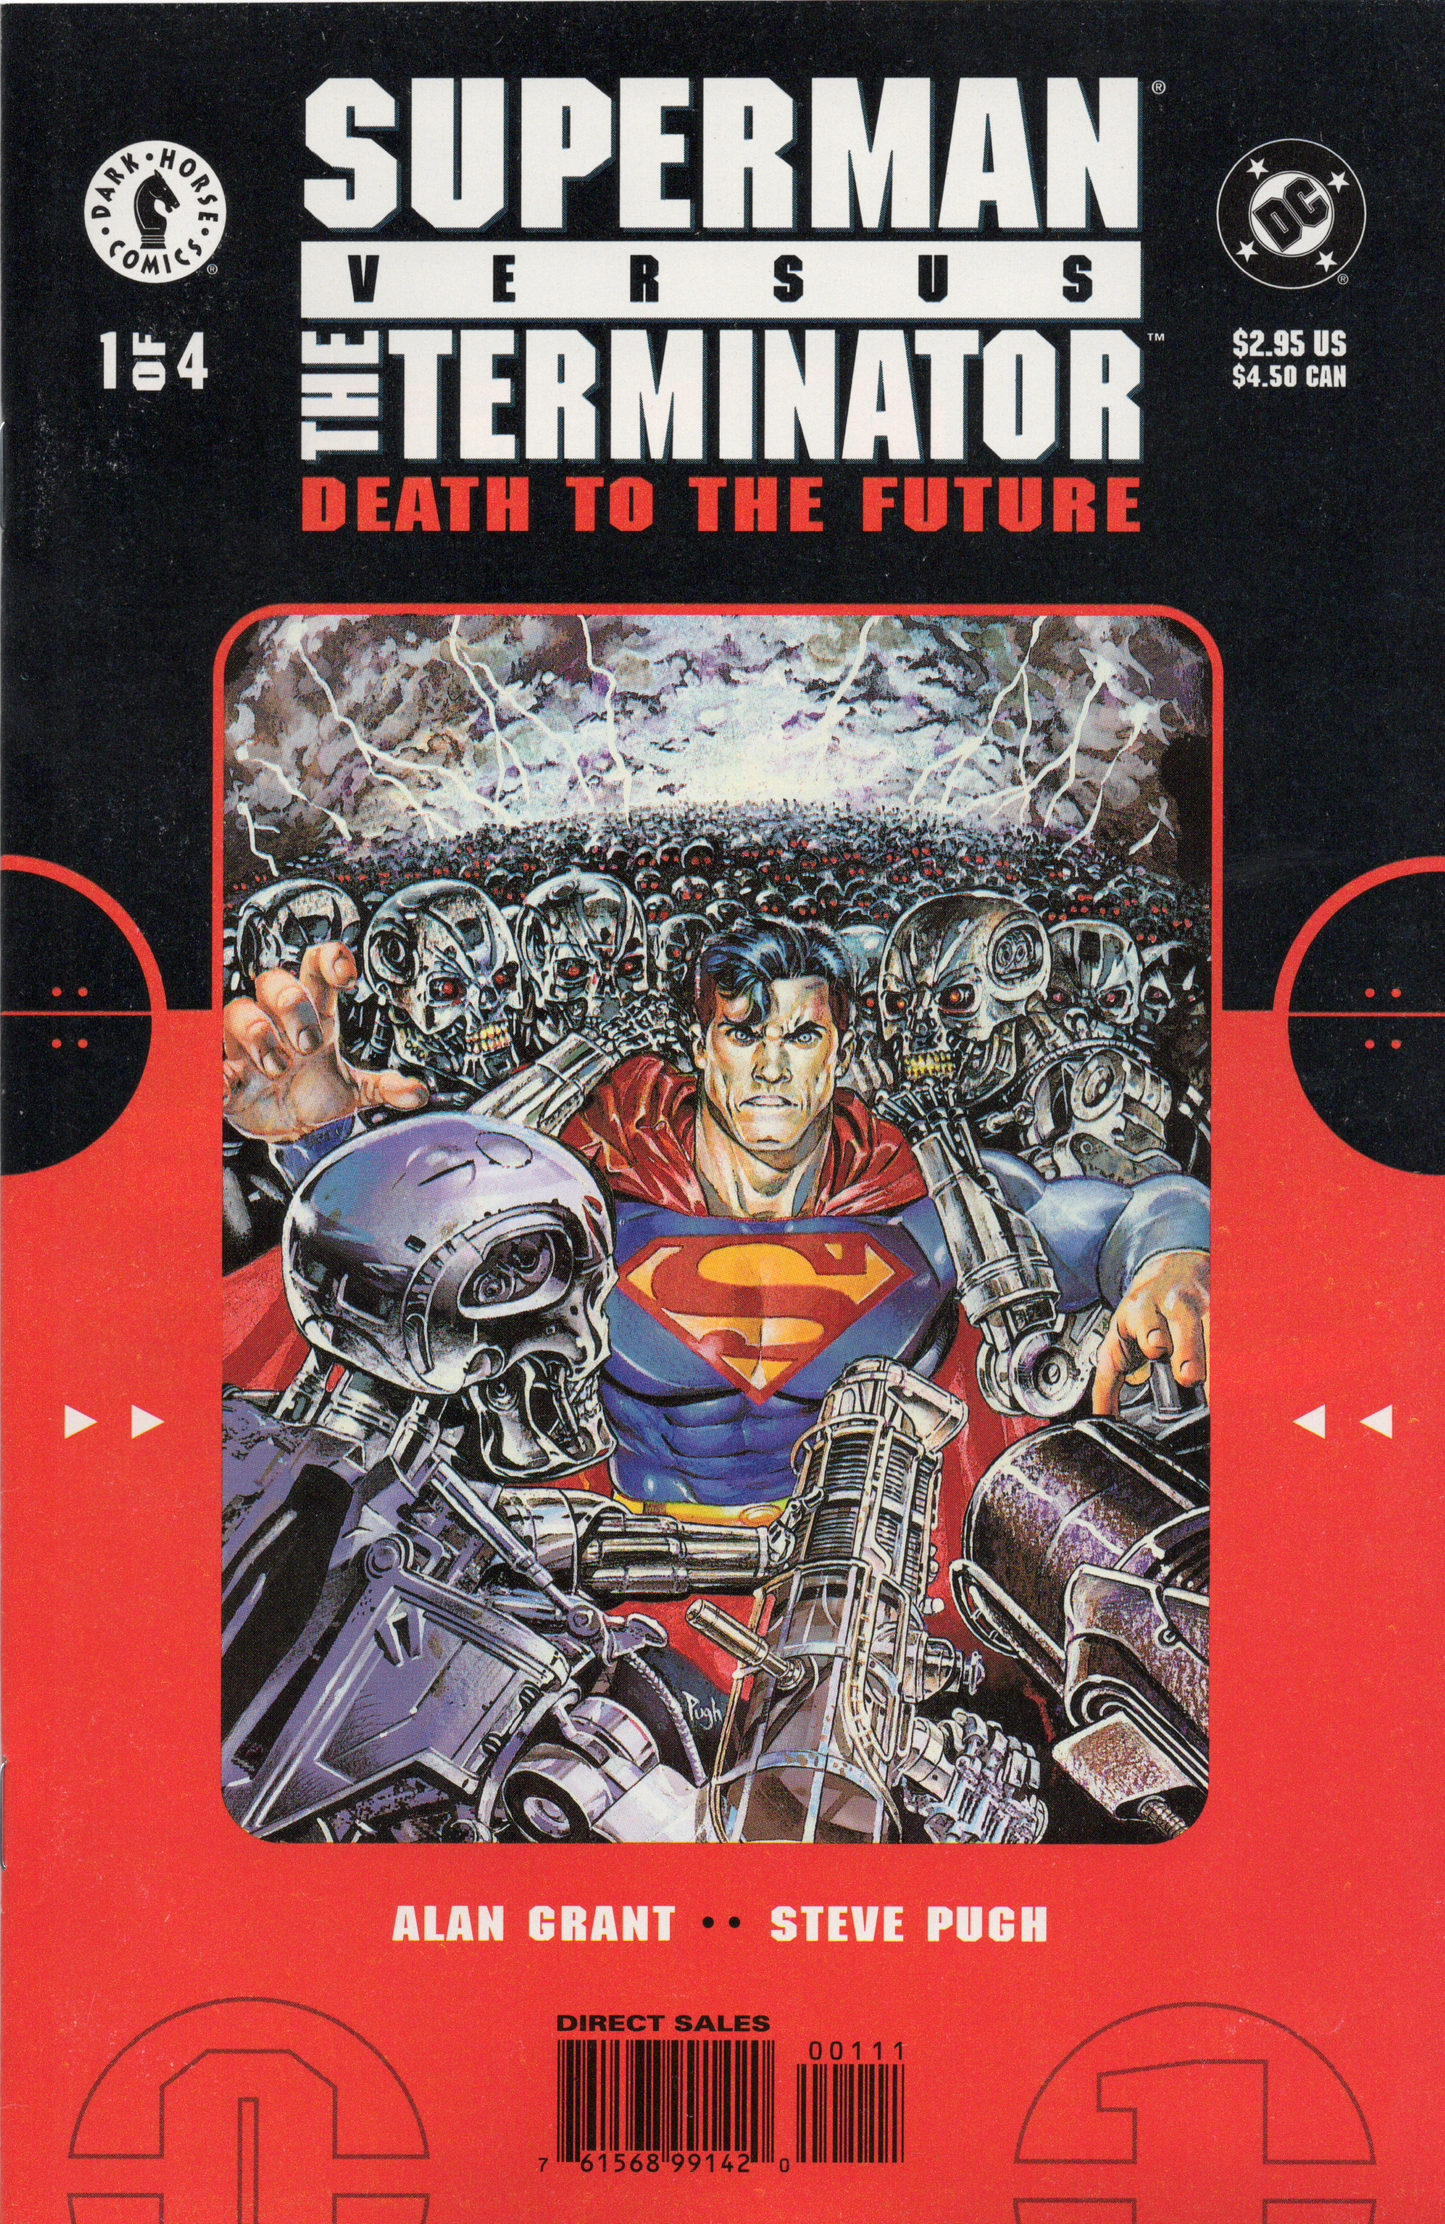 Superman Versus Terminator issue 1, front view